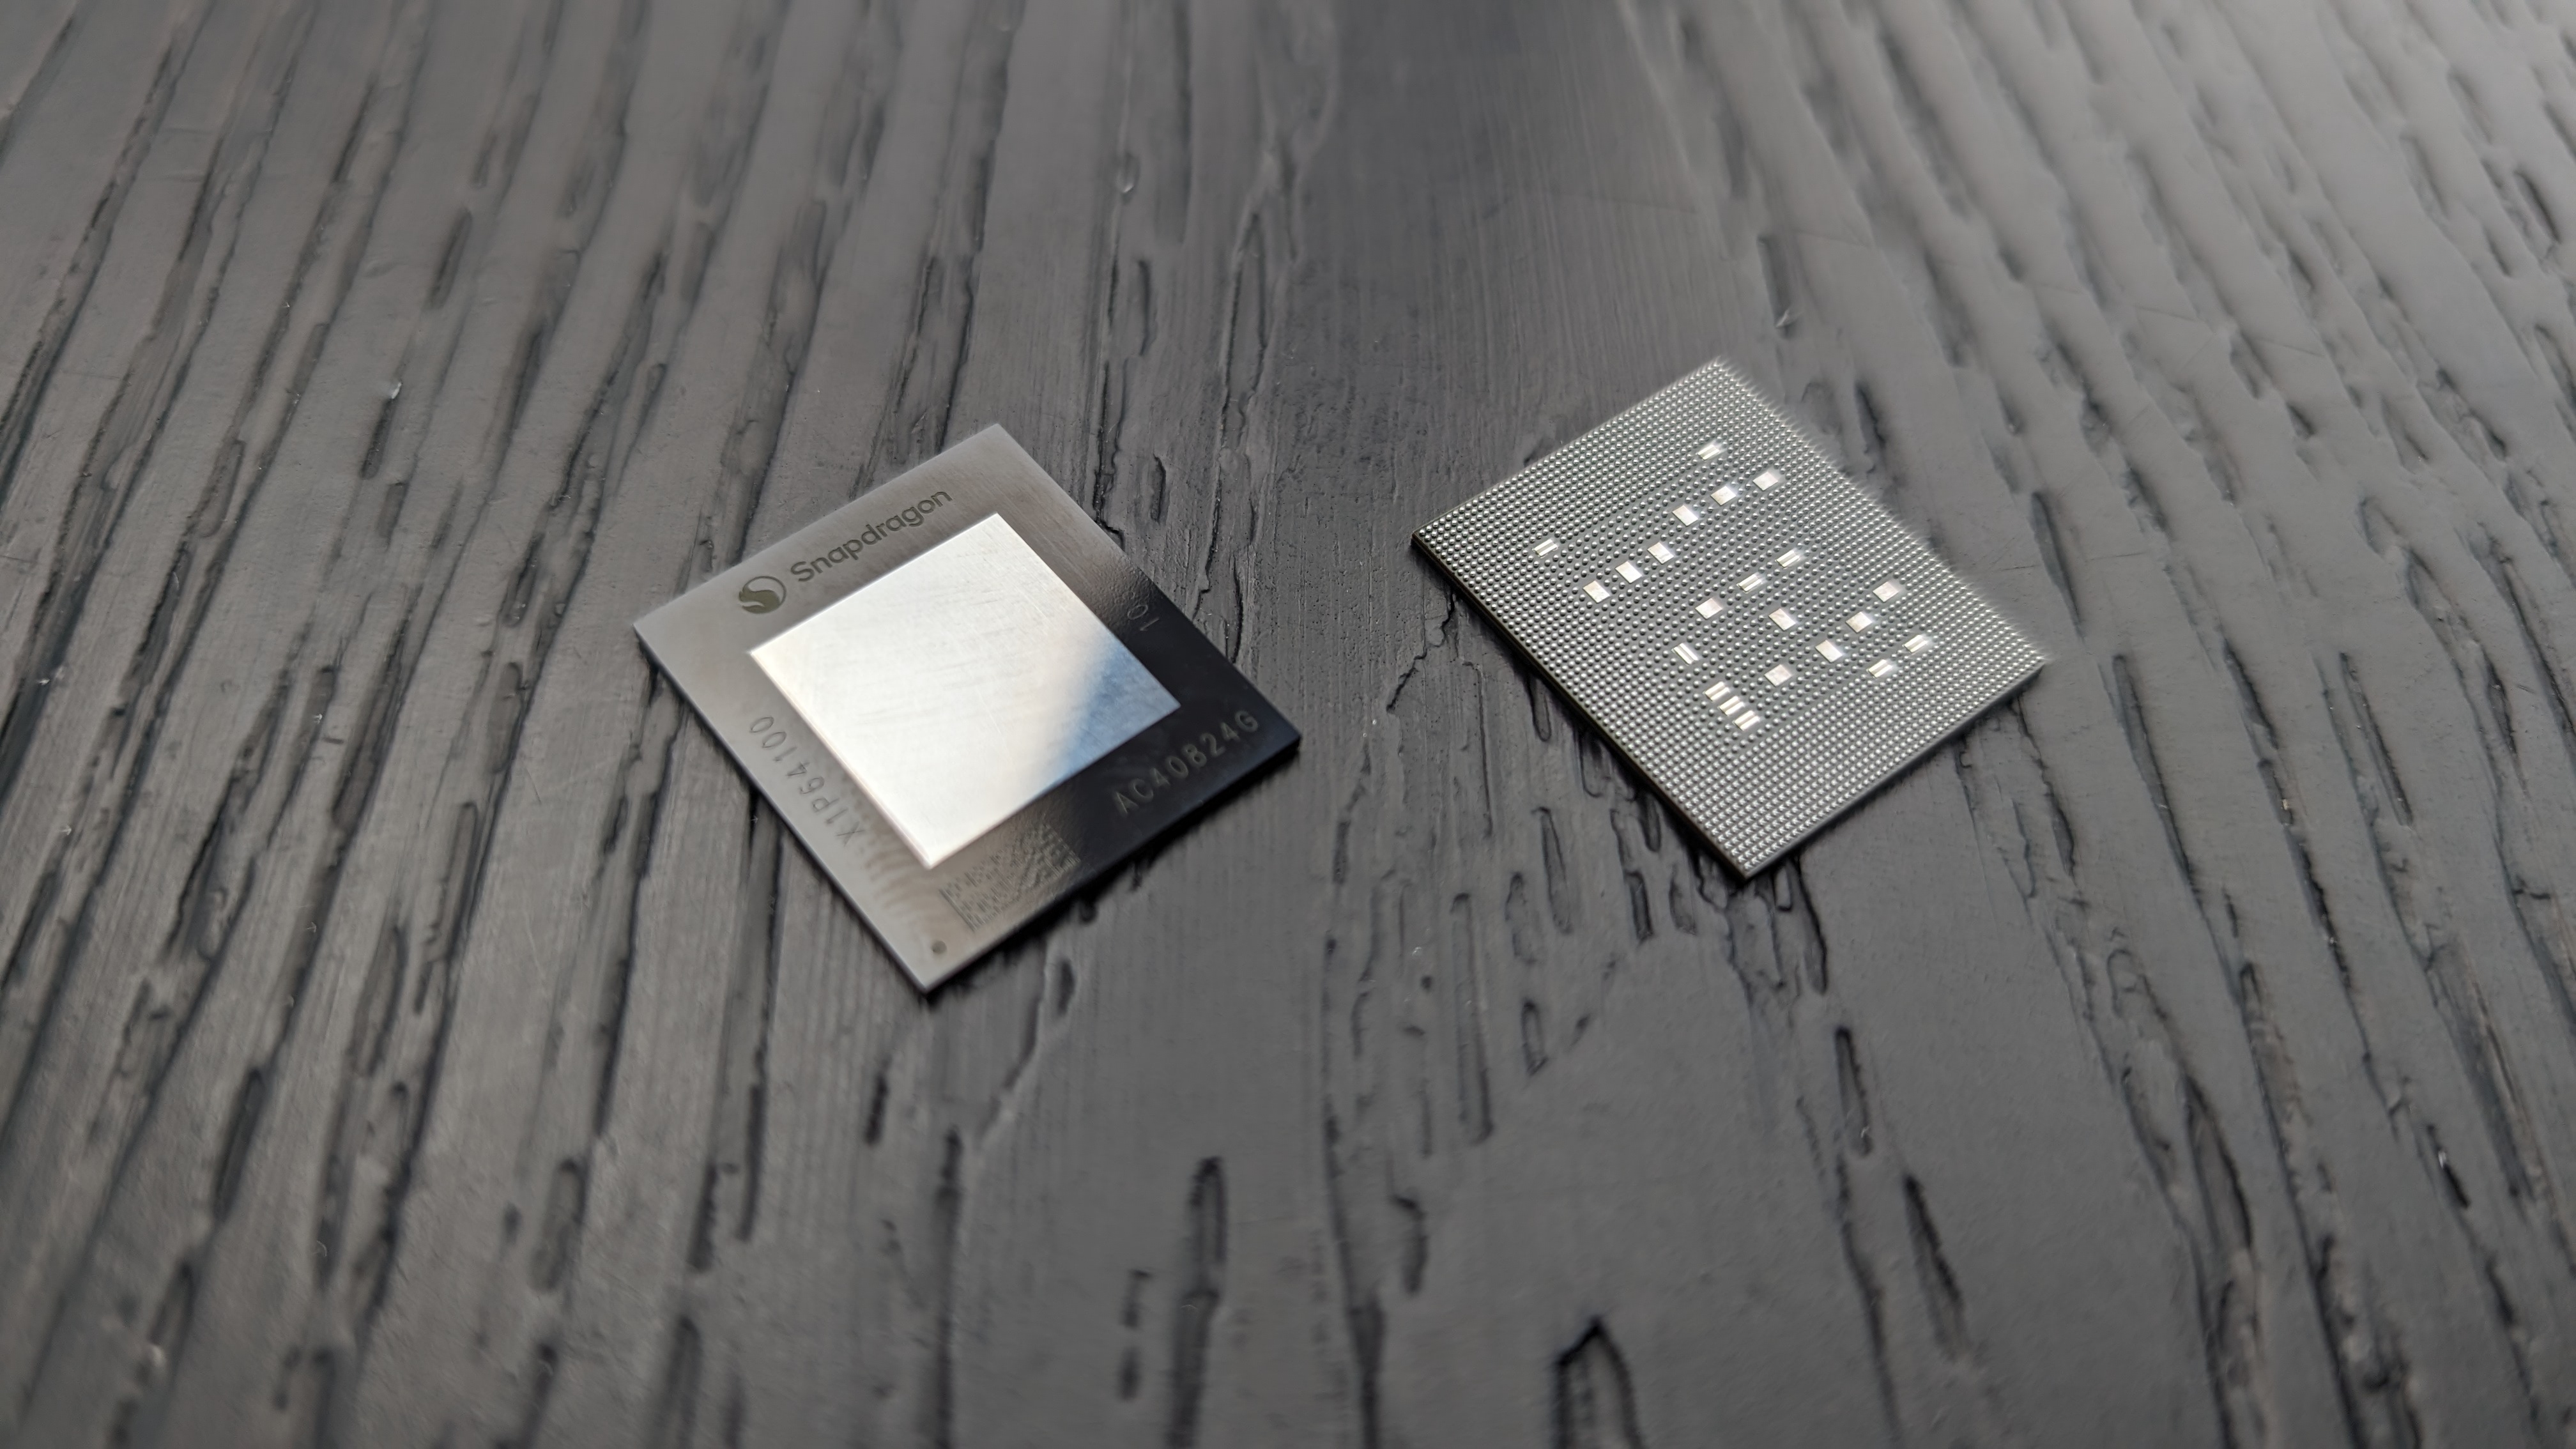 Siyah ahşap yüzey üzerinde bir Snapdragon X mikroçipi.